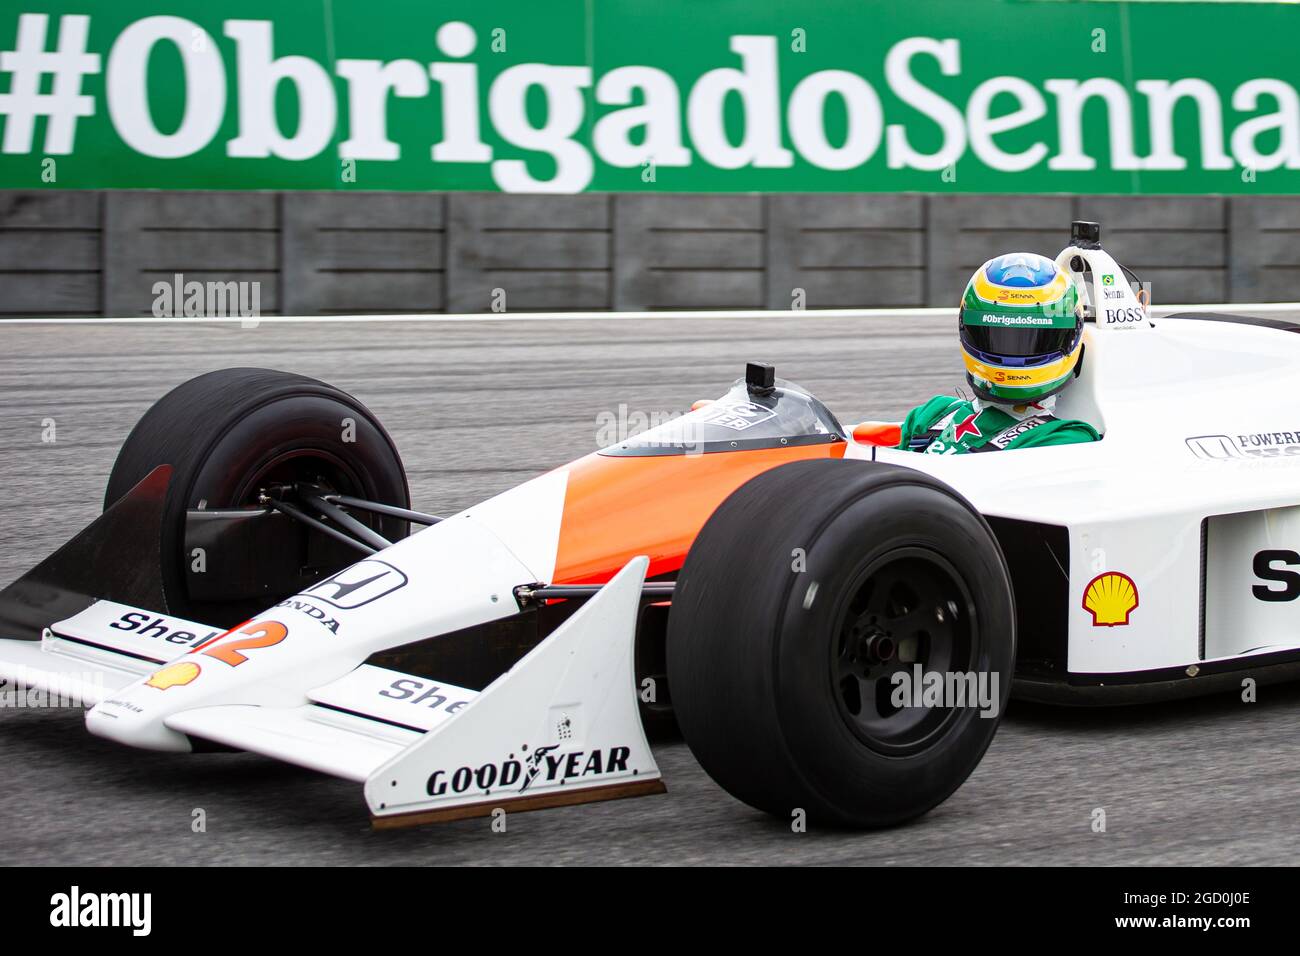 The 1988 McLaren MP4/4 raced by Ayrton Senna. Brazilian Grand Prix, Thursday 14th November 2019. Sao Paulo, Brazil. Stock Photo